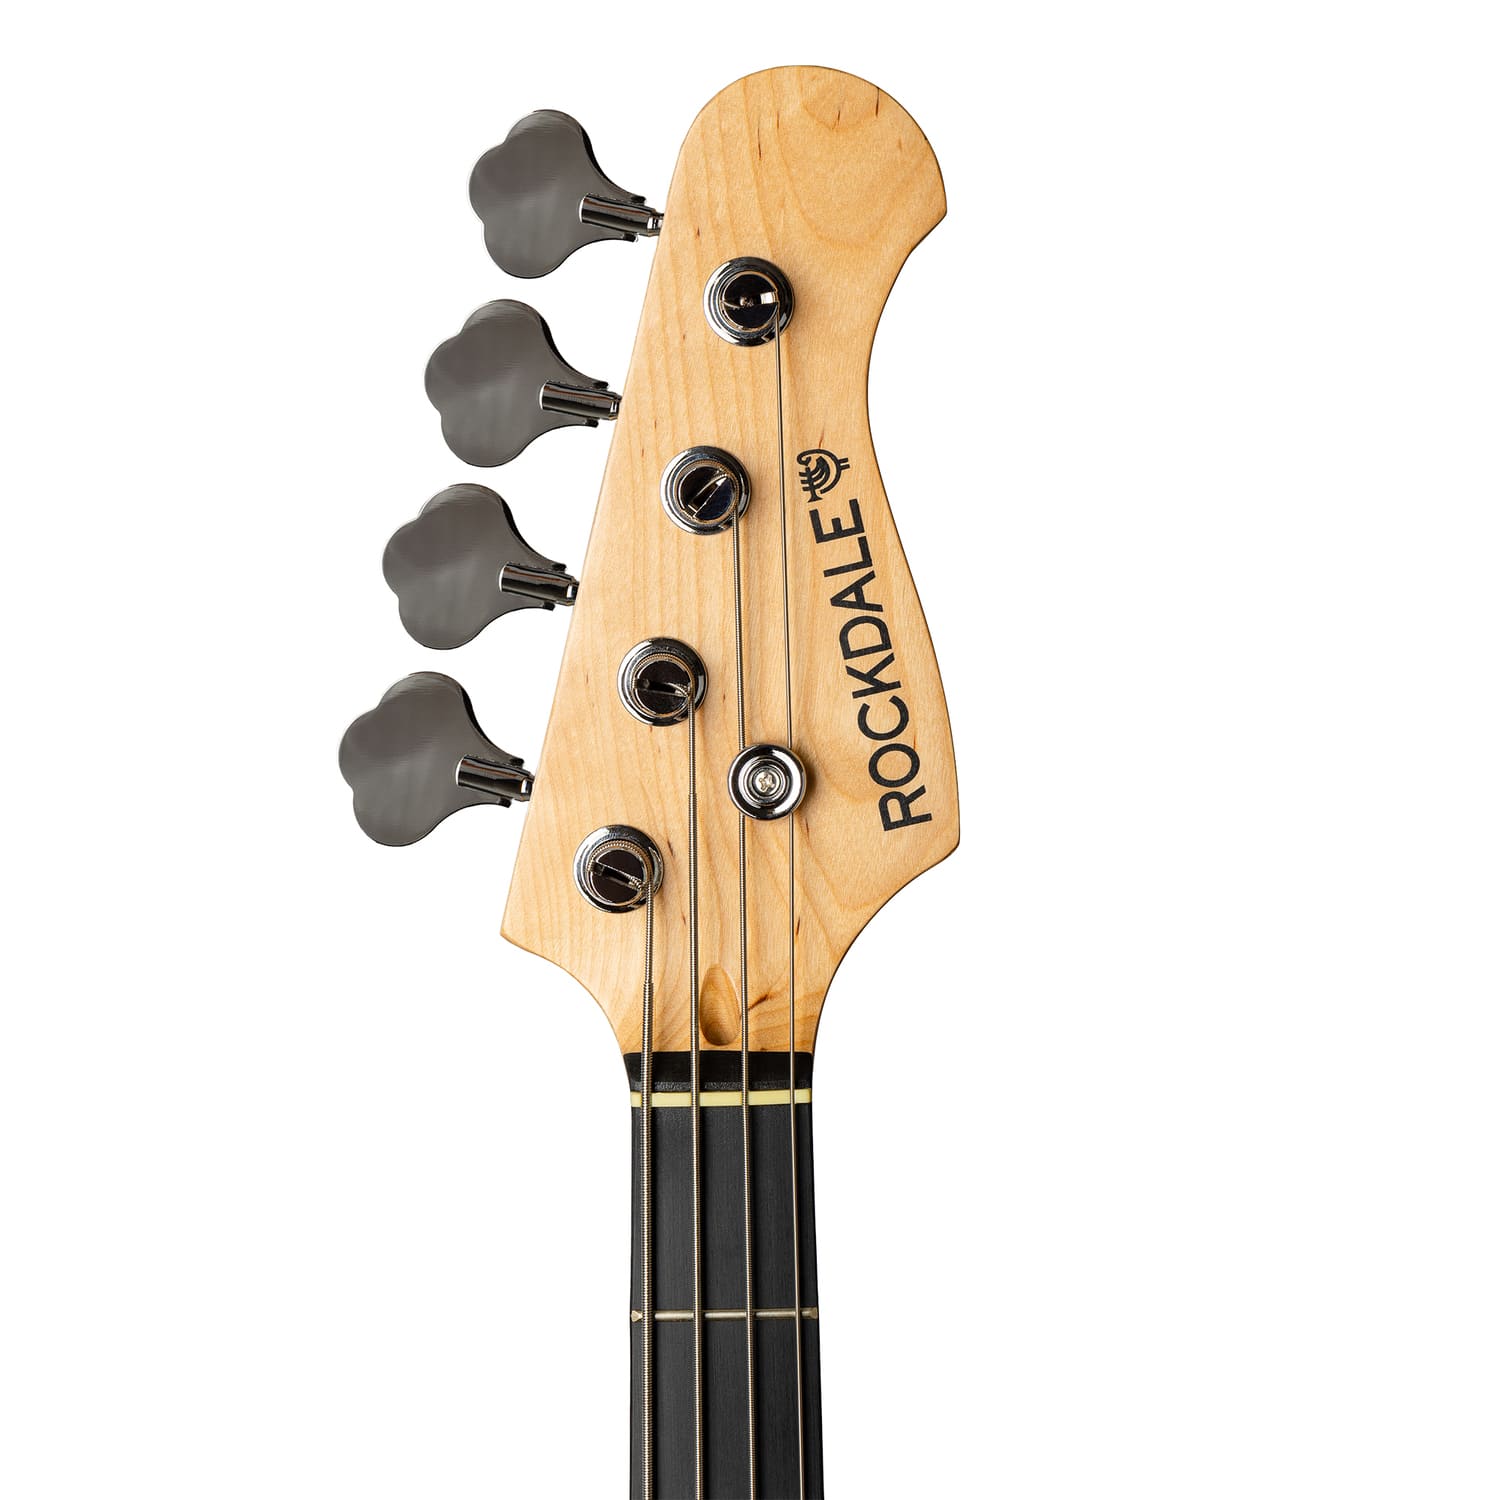 Rockdale Stars PB Bass Black  бас-гитара пресижн, цвет черный